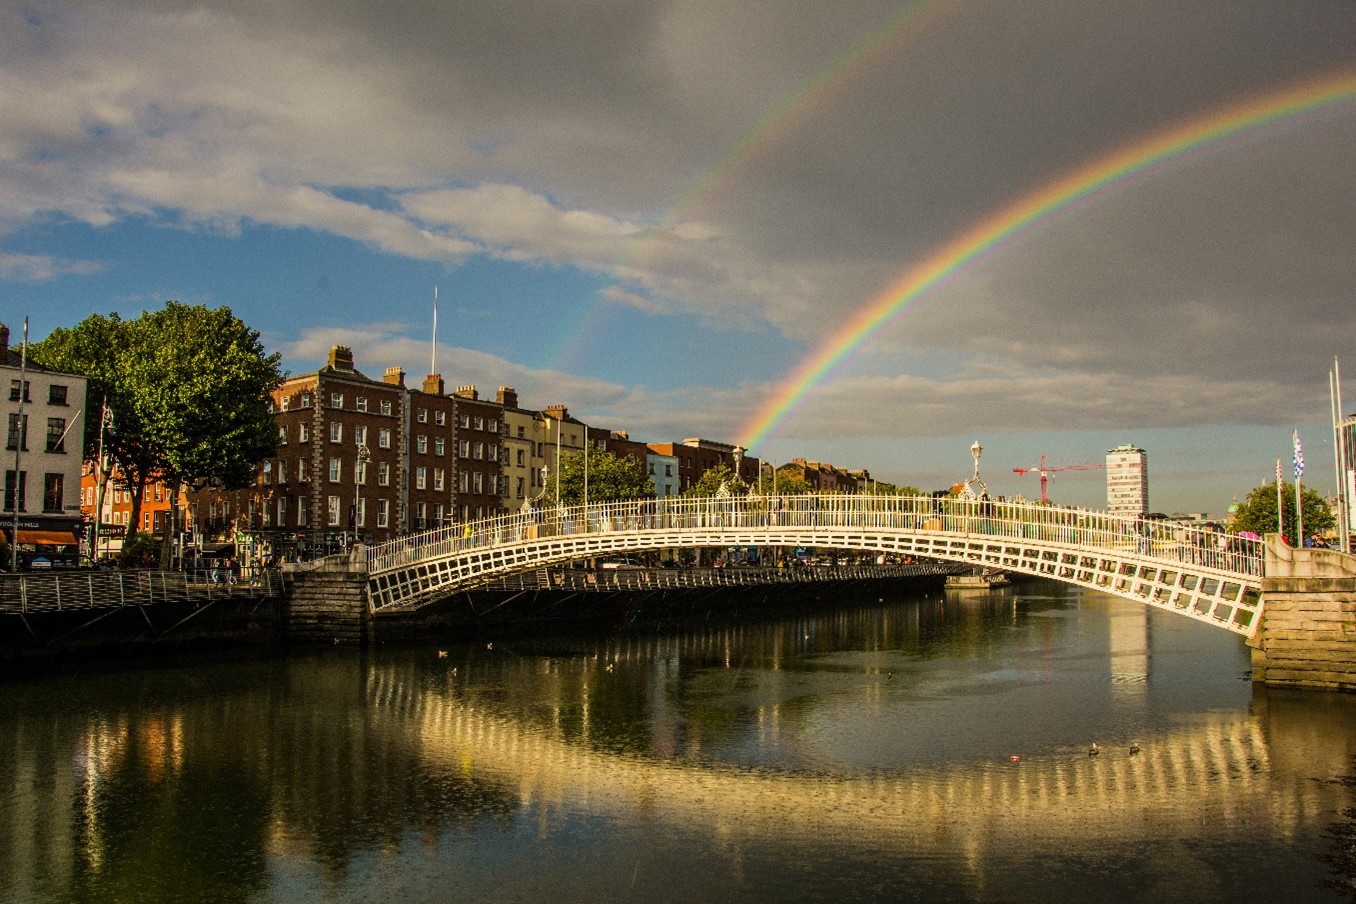 White bridge over water with rainbow